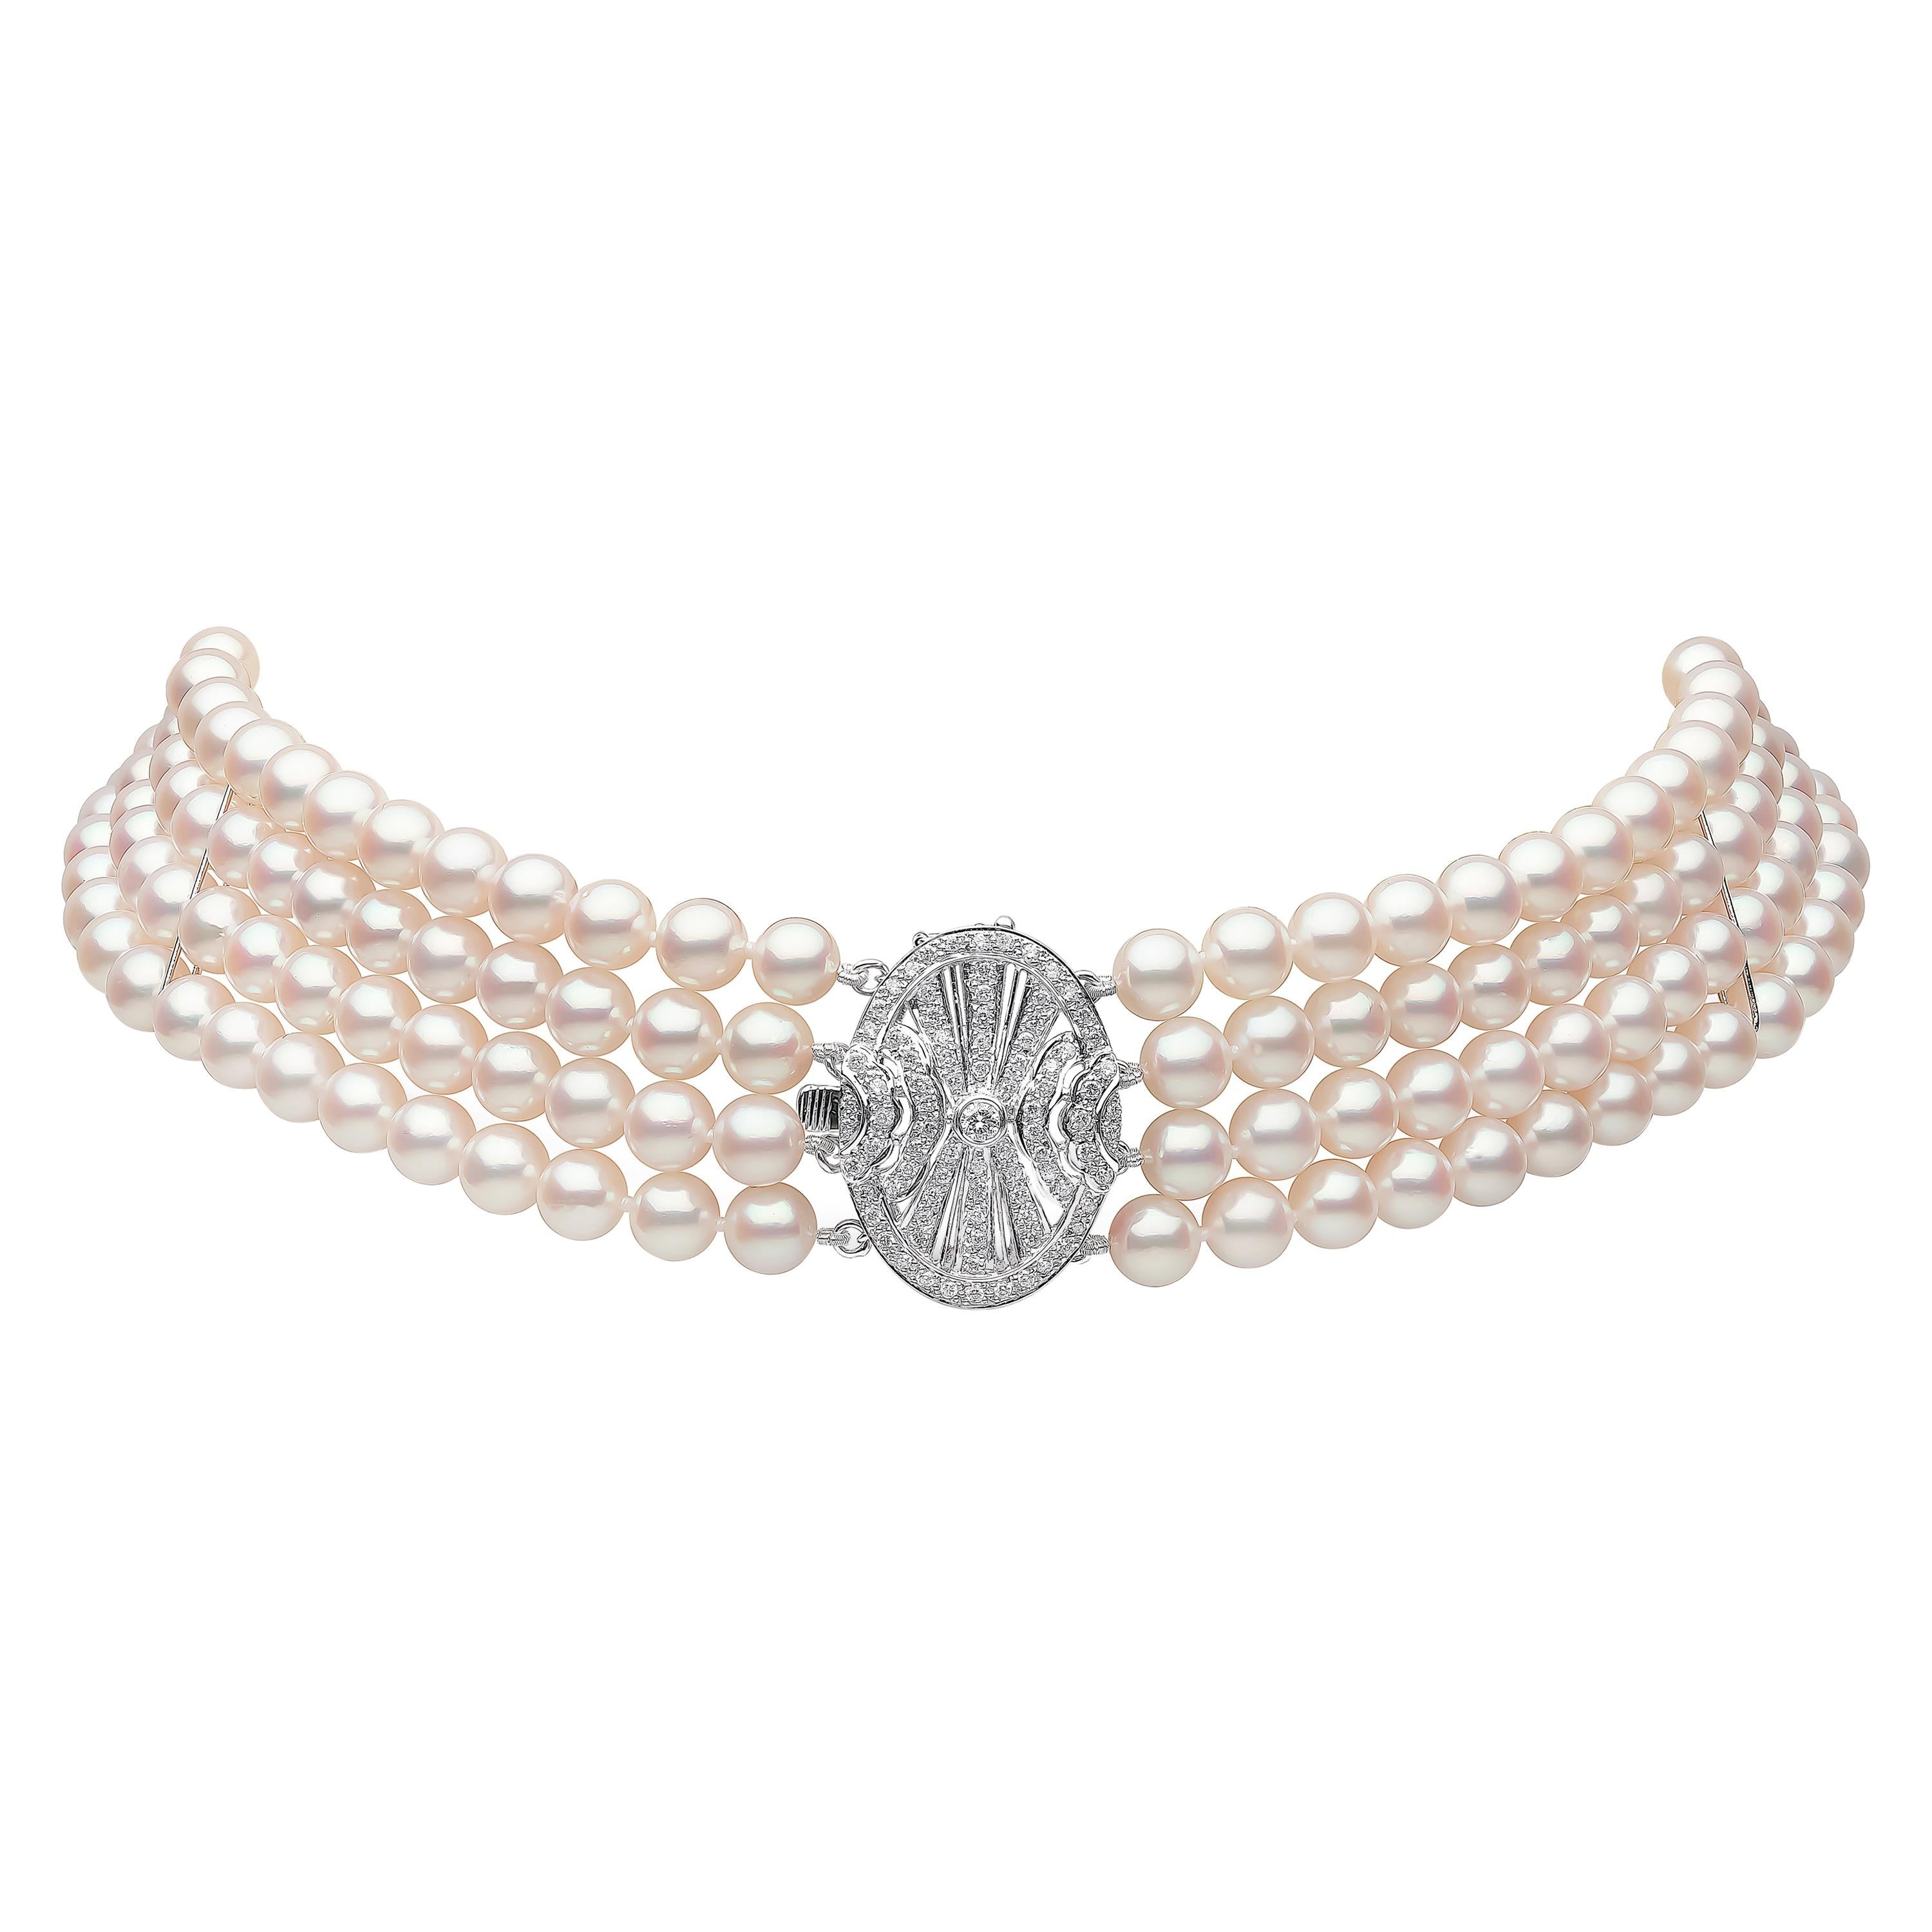 Yoko London Akoya Pearl and Diamond Choker Necklace in 18K White Gold